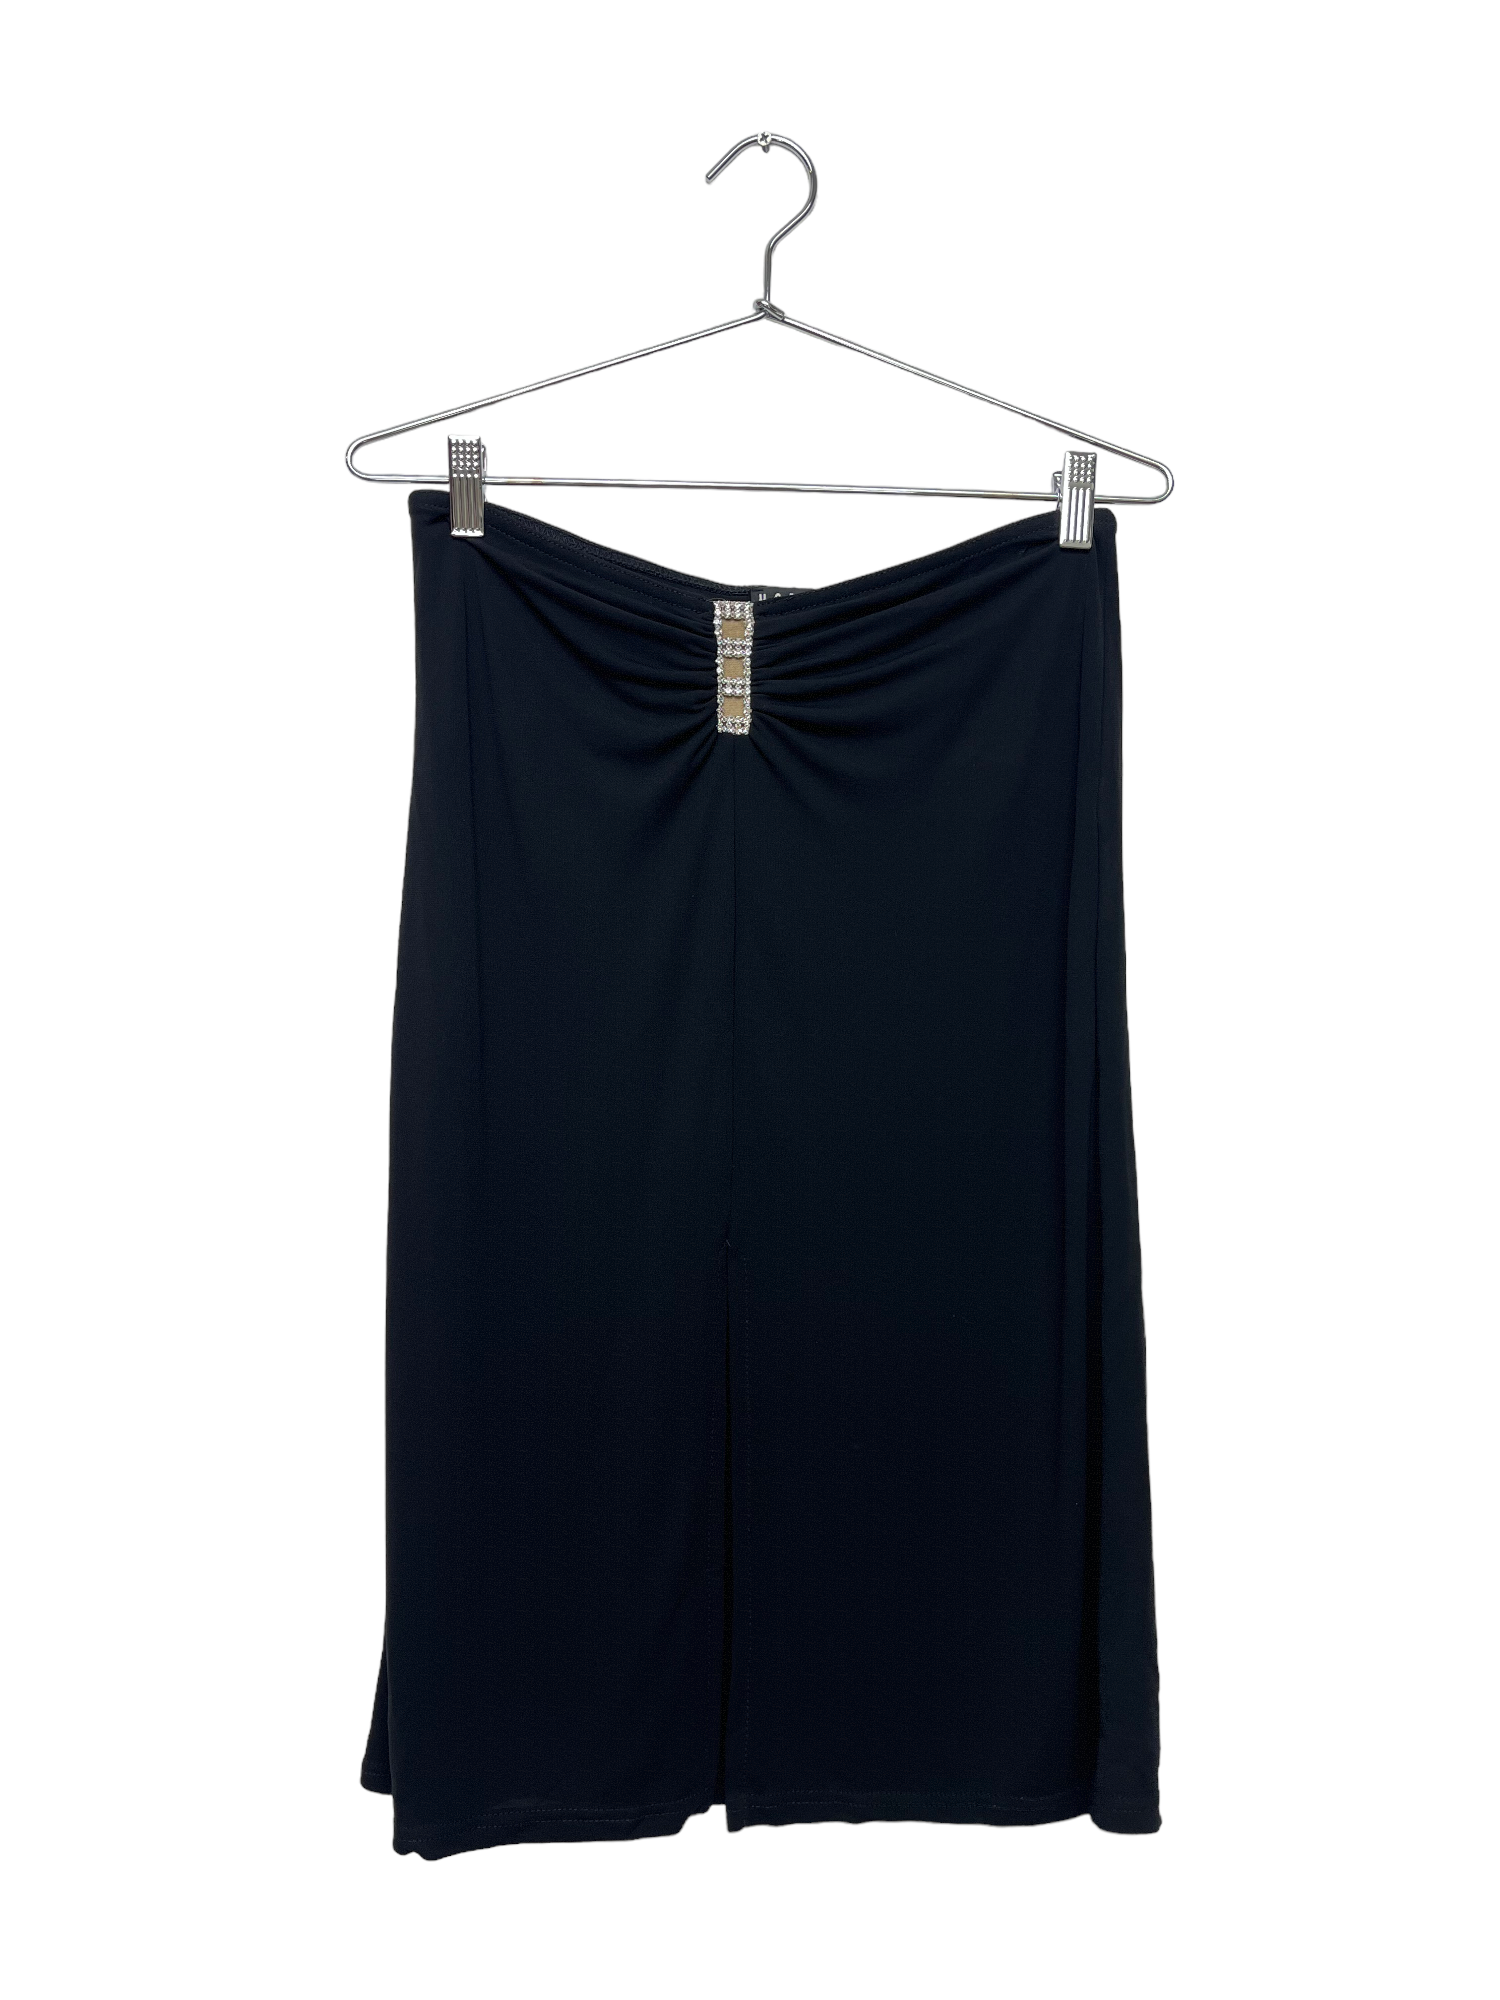 Rhinestone Black Midi skirt